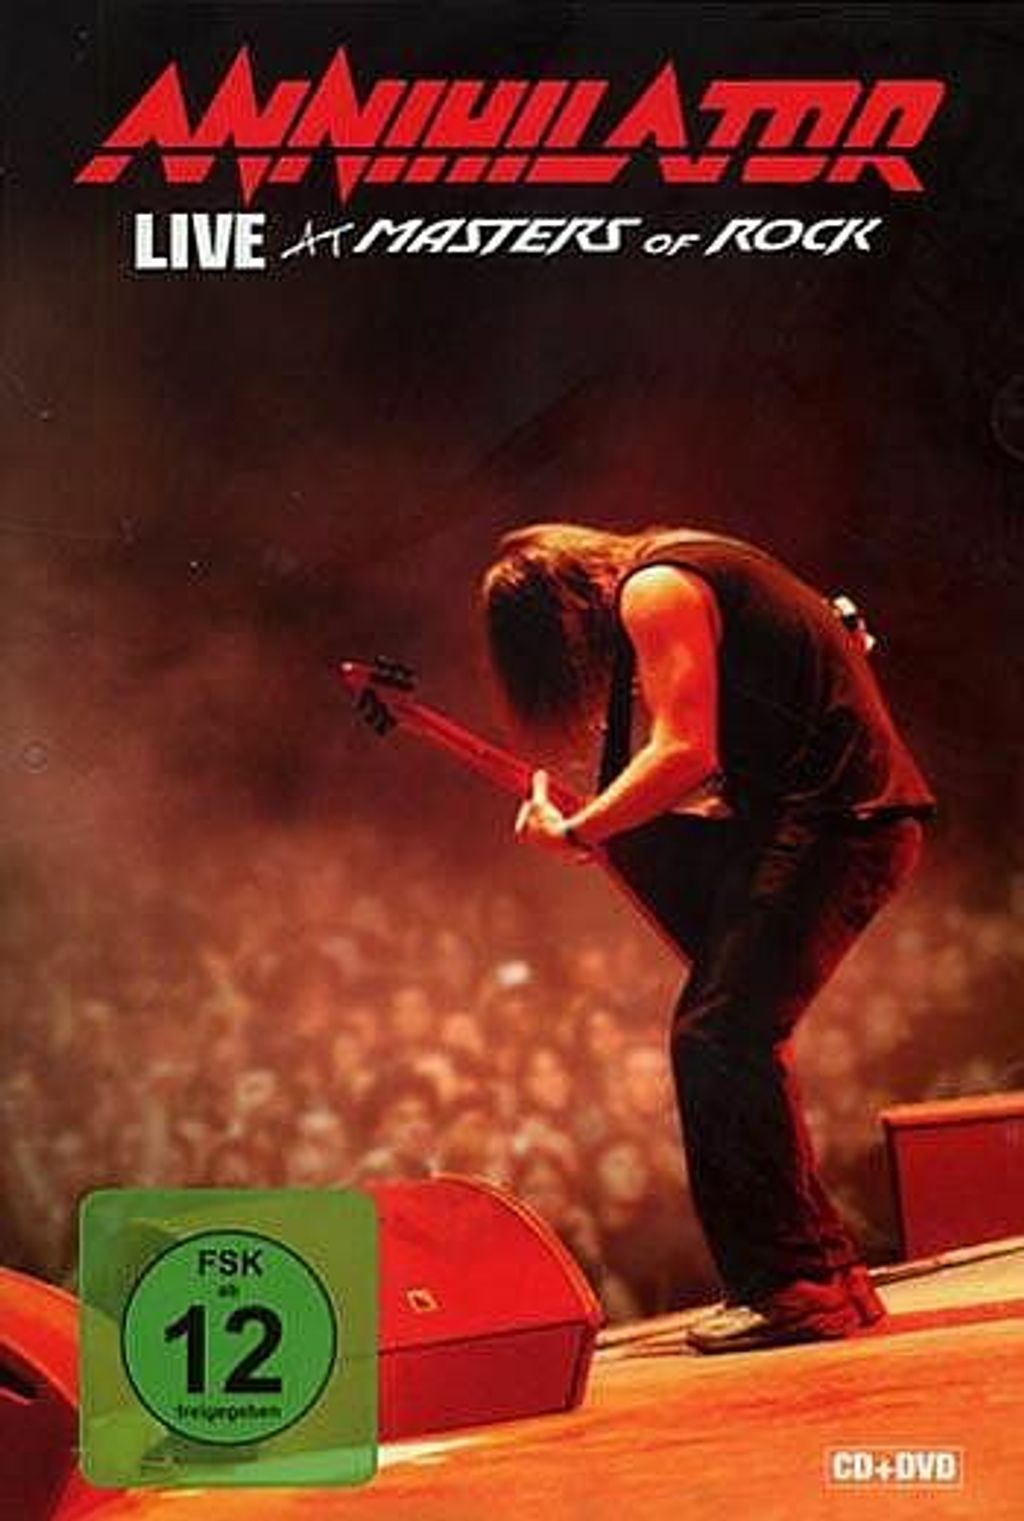 ANNIHILATOR Live At Masters Of Rock CD+DVD.jpg